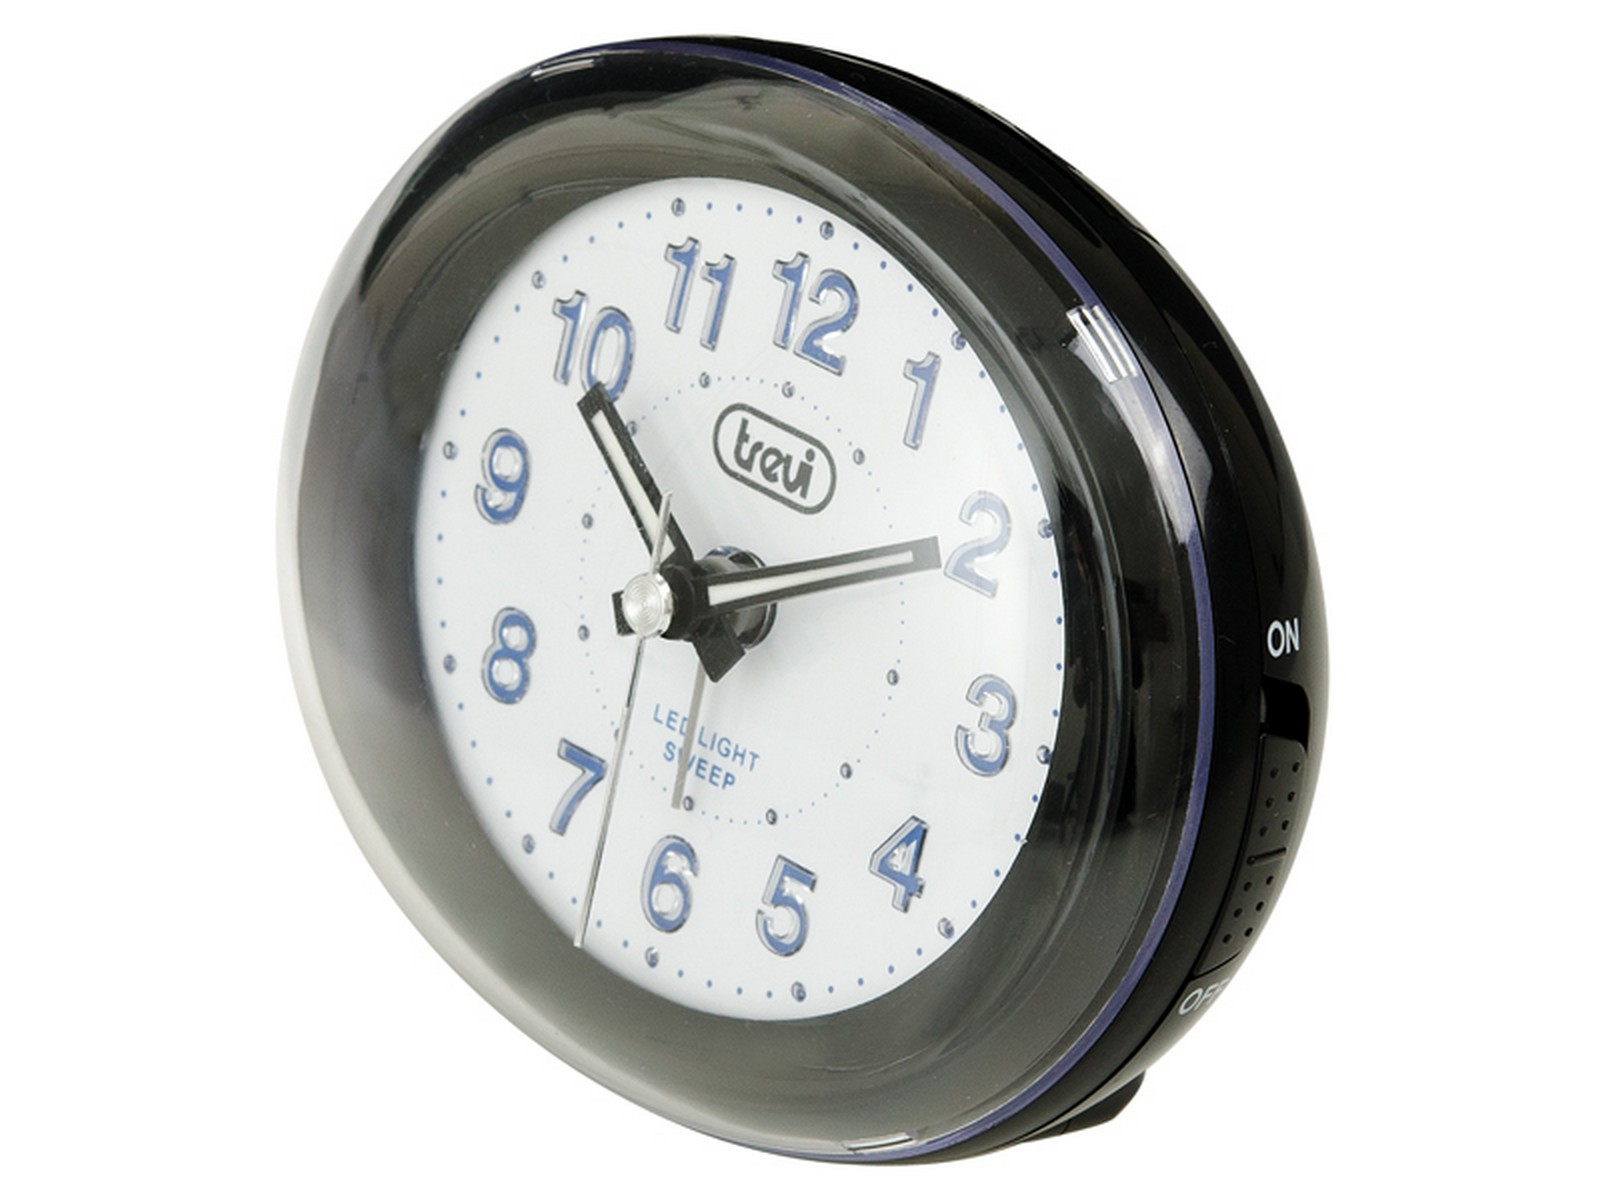 Reloj Mesa Trevi sl 3052 despertador quarz megro negro color blanco alarma